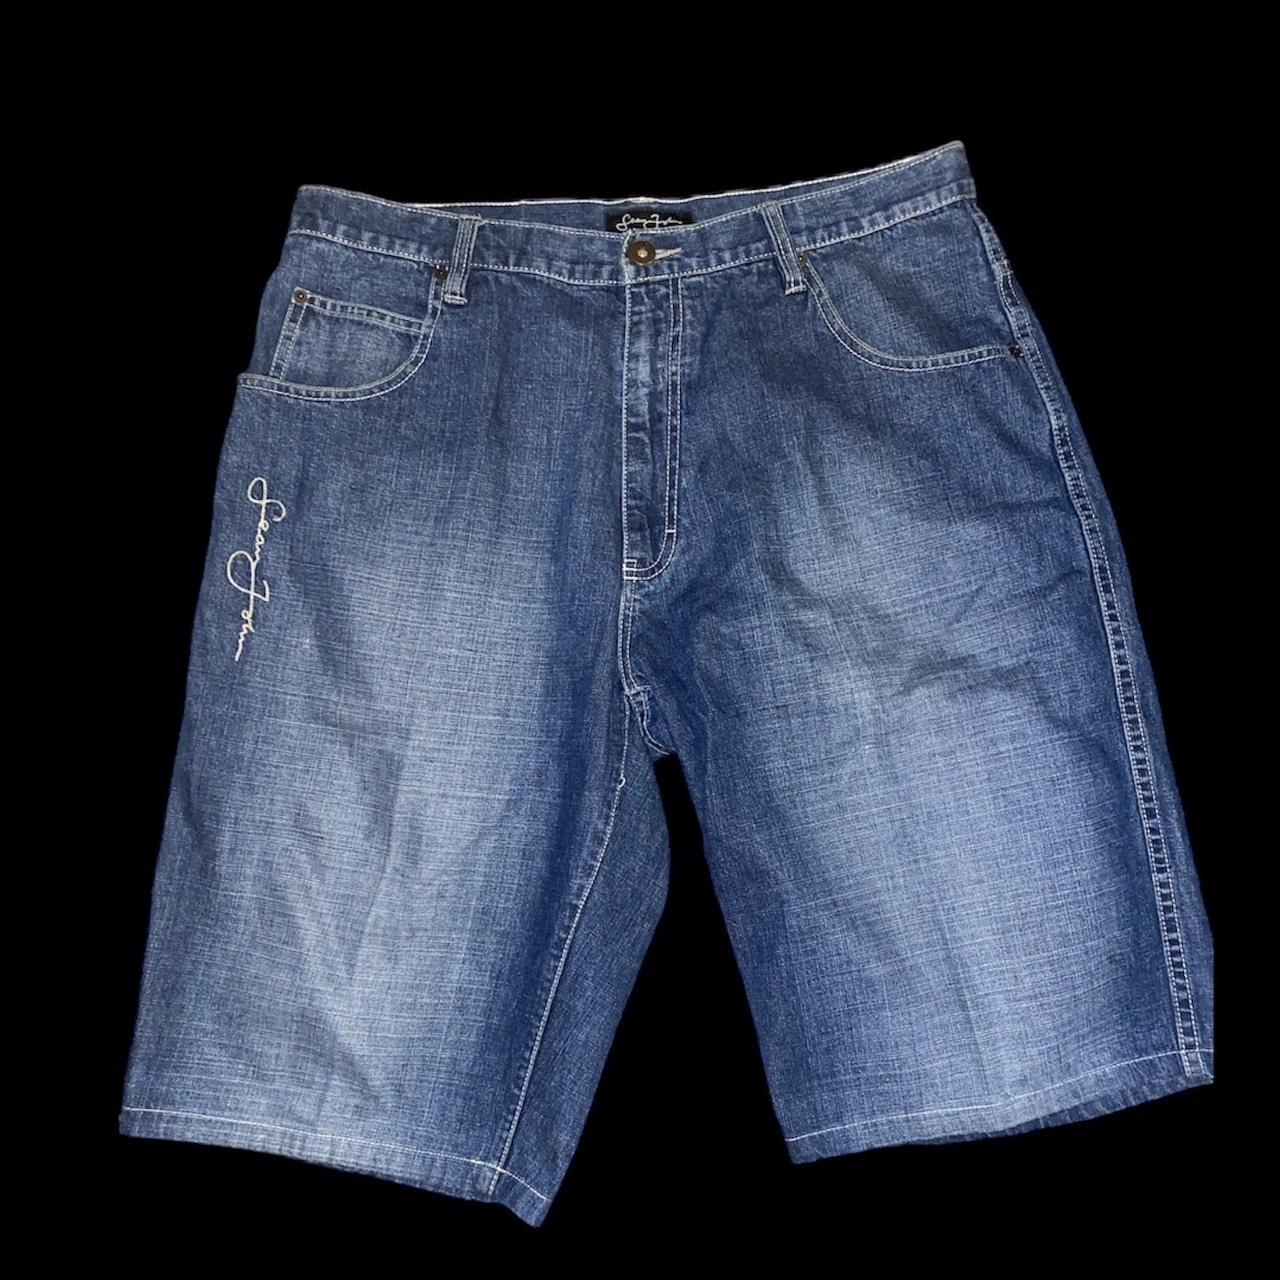 Sean John Men's Blue and Grey Shorts | Depop